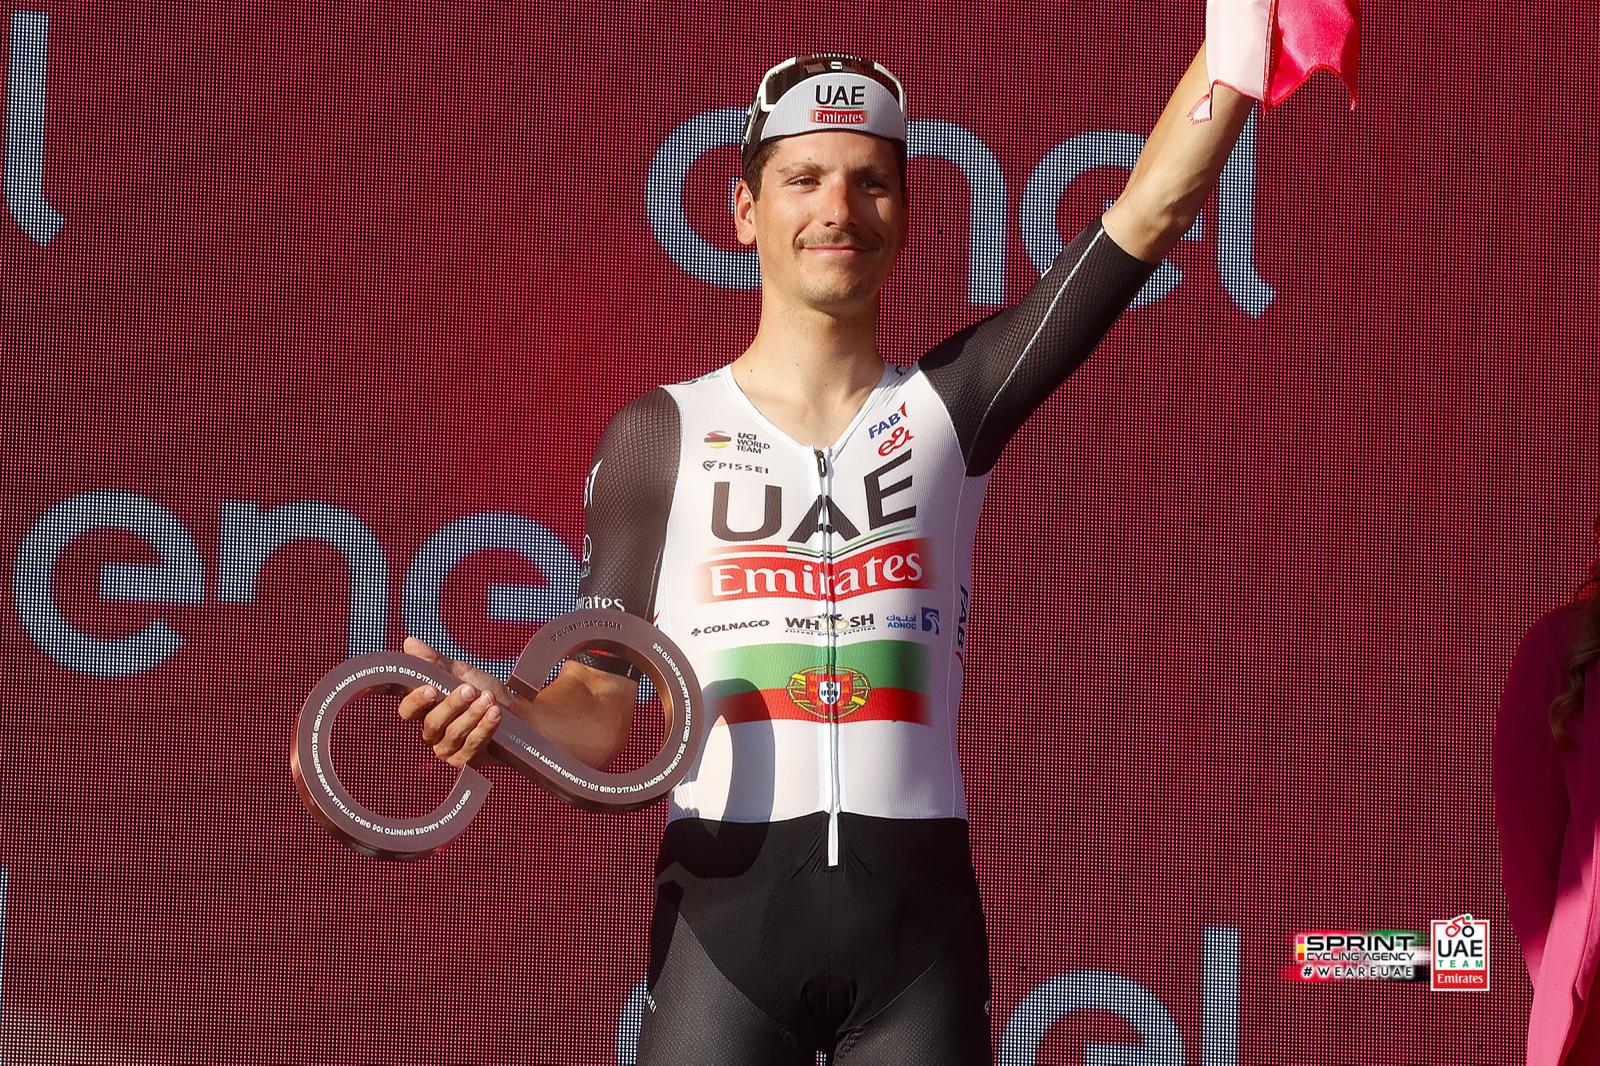 Joao Almeida seals podium finish at the Giro d’Italia - UAE team Emirates